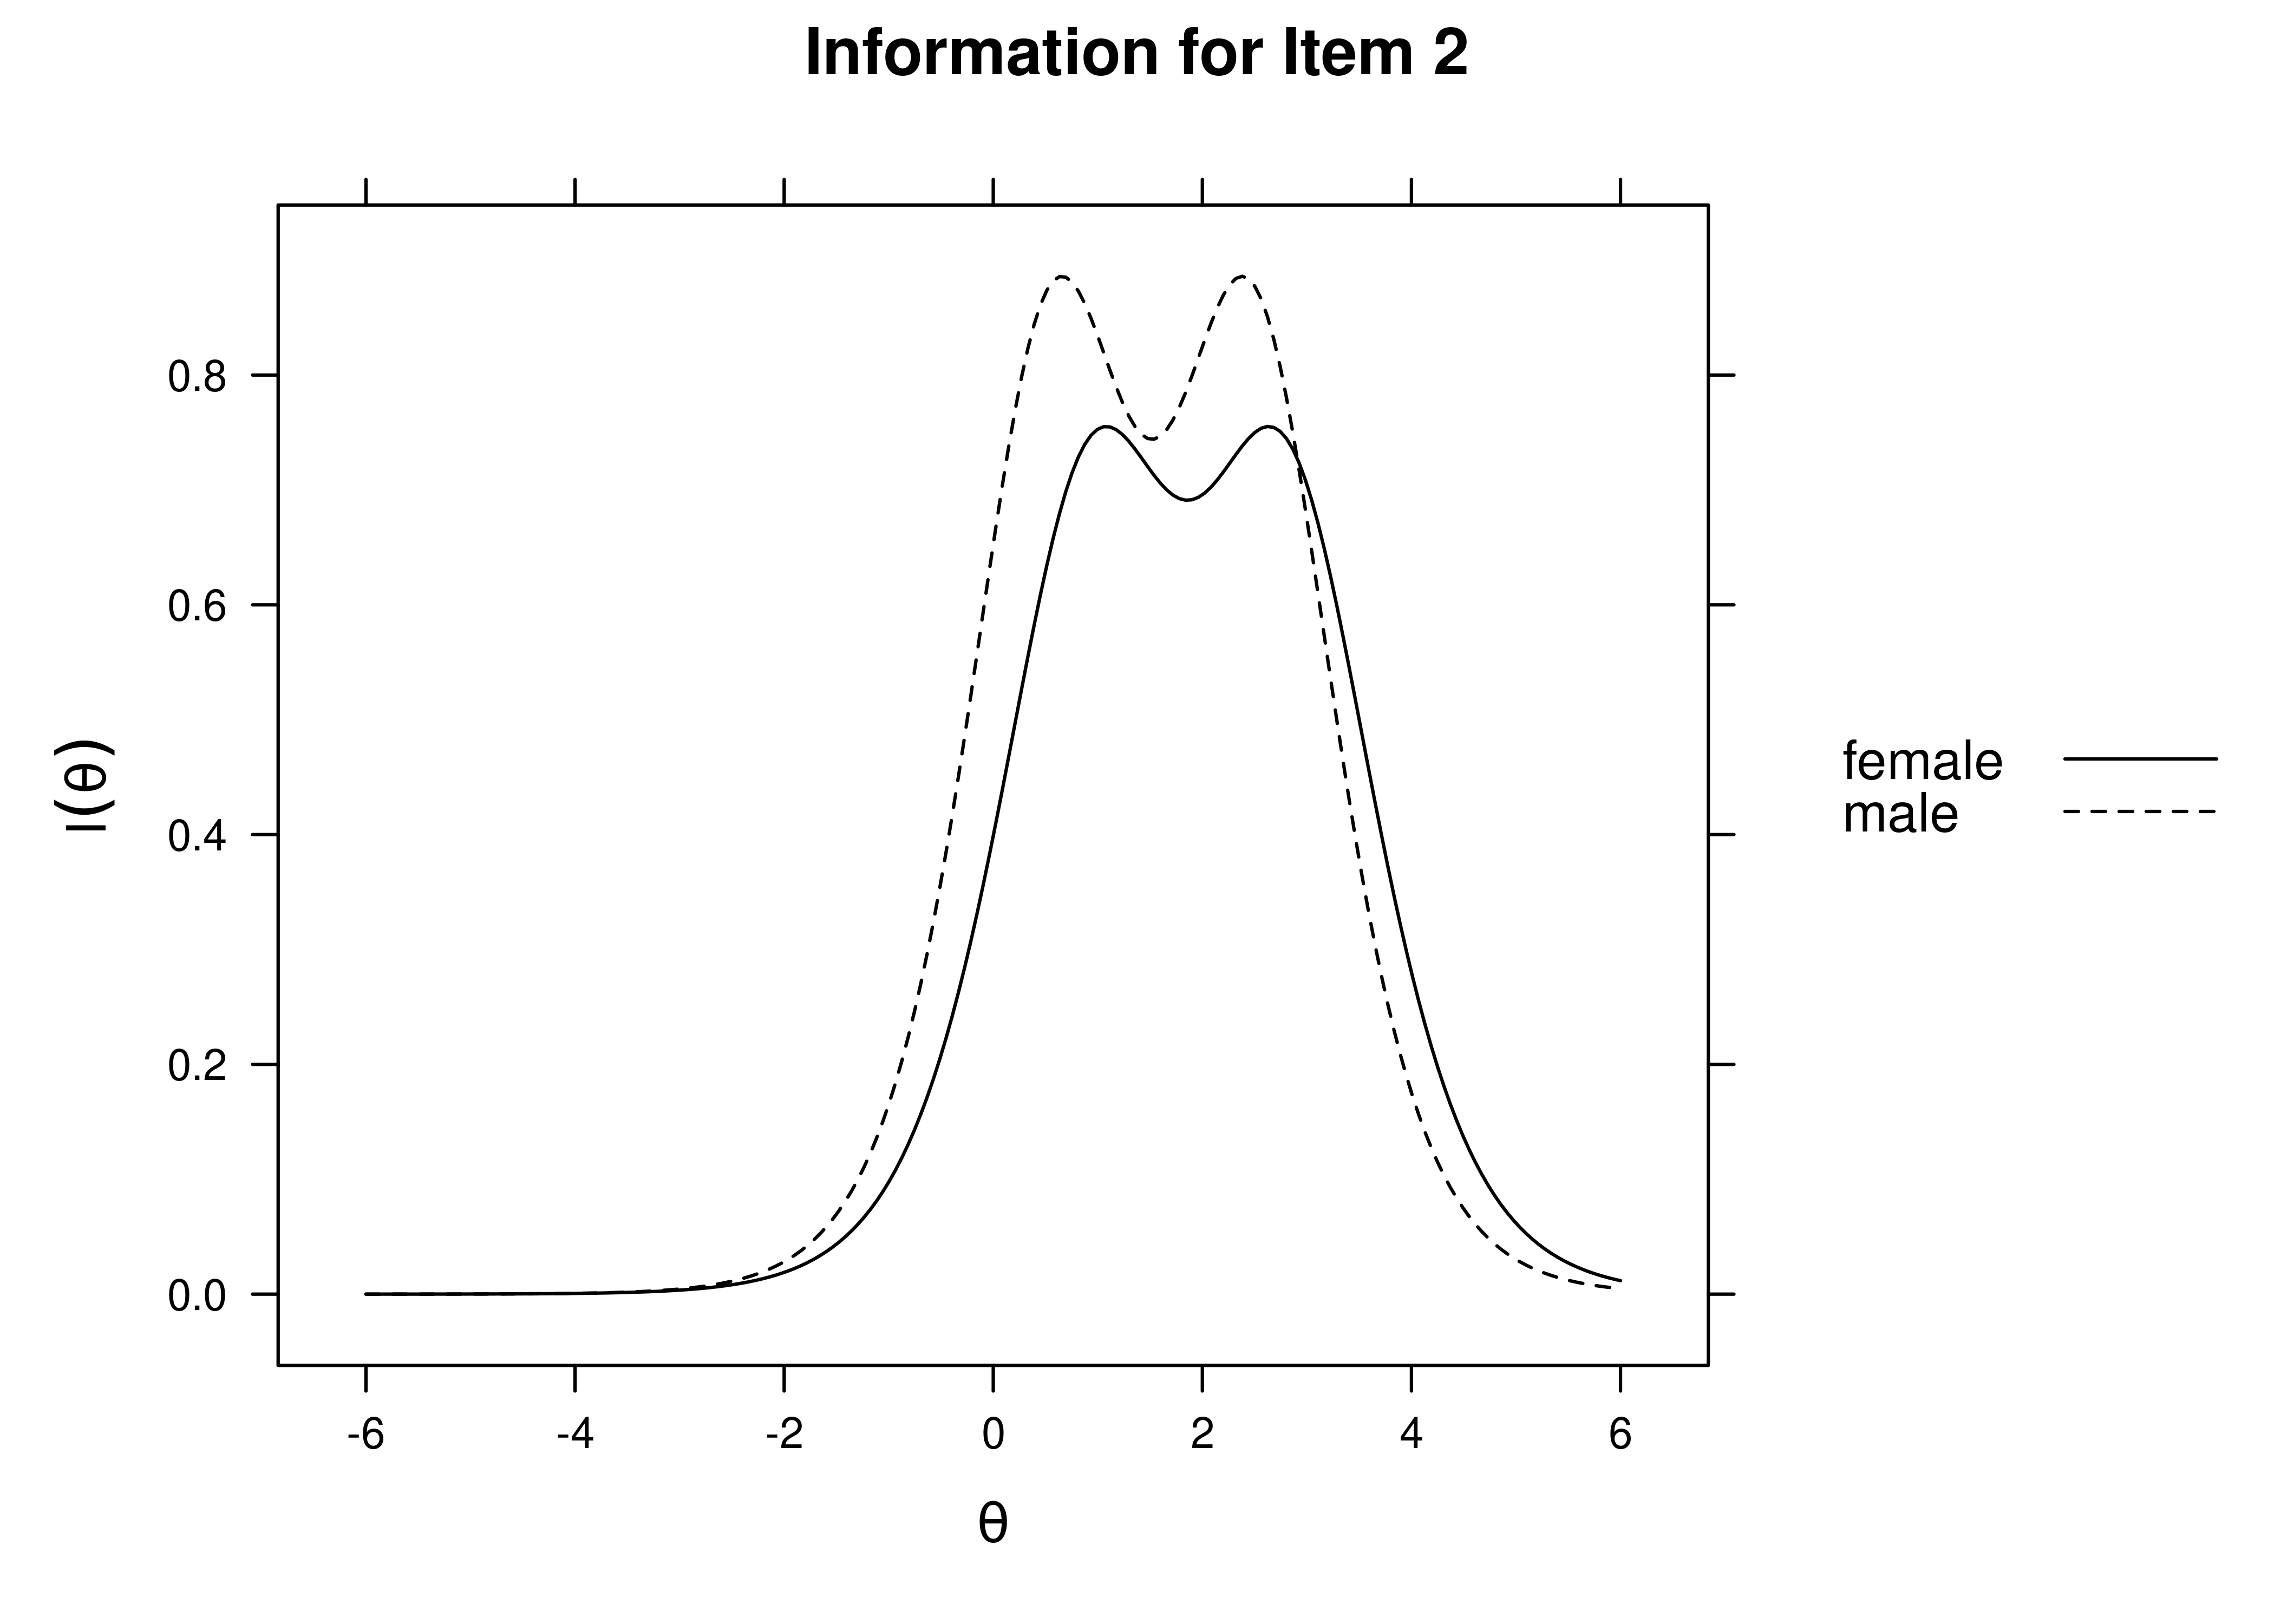 Item Information Curves by Sex: Item 2.